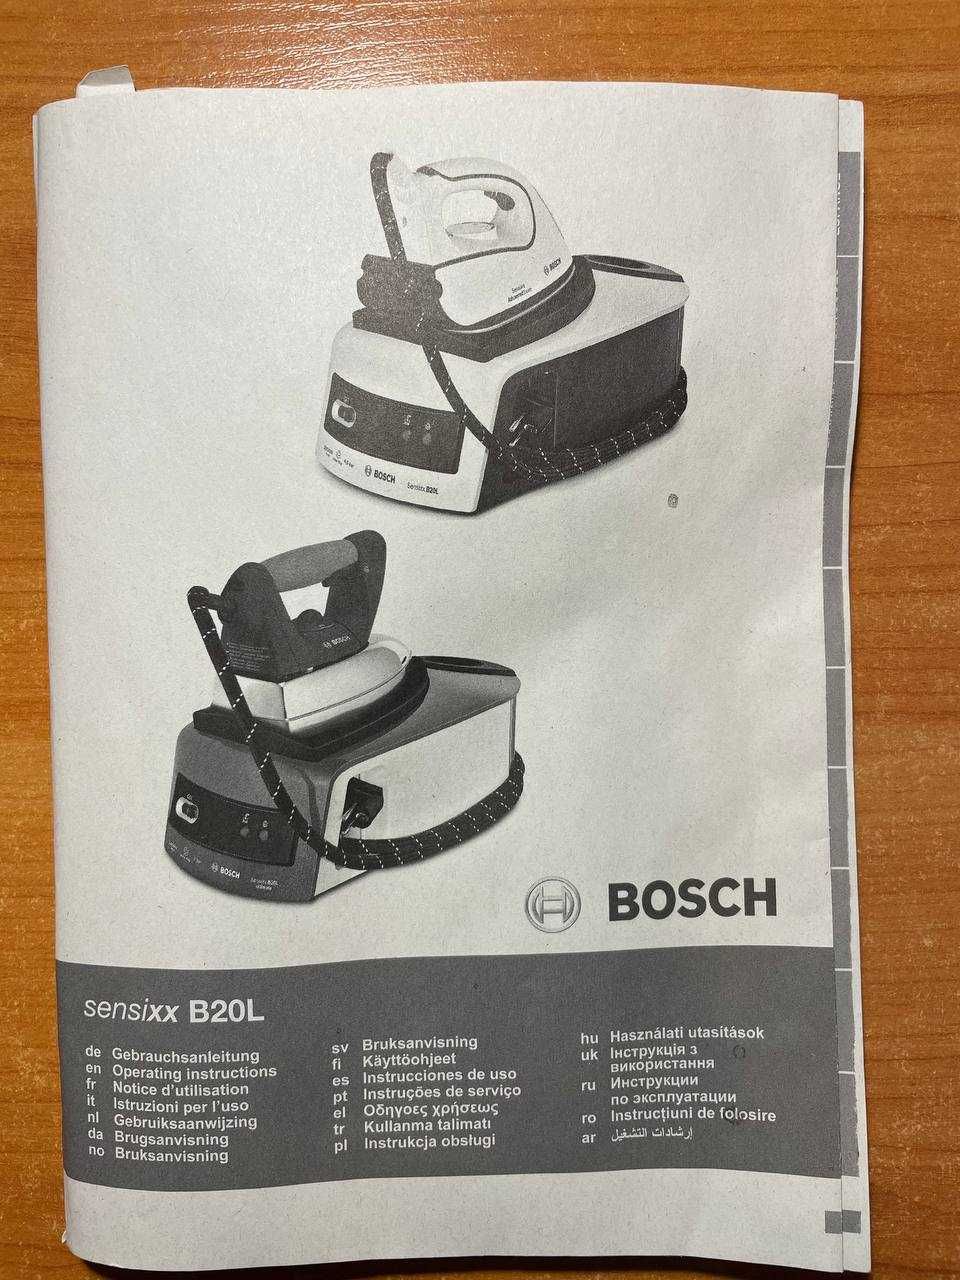 Парогенератор Bosch TDS2016 
Новий
Споживча потужність 2300 Вт